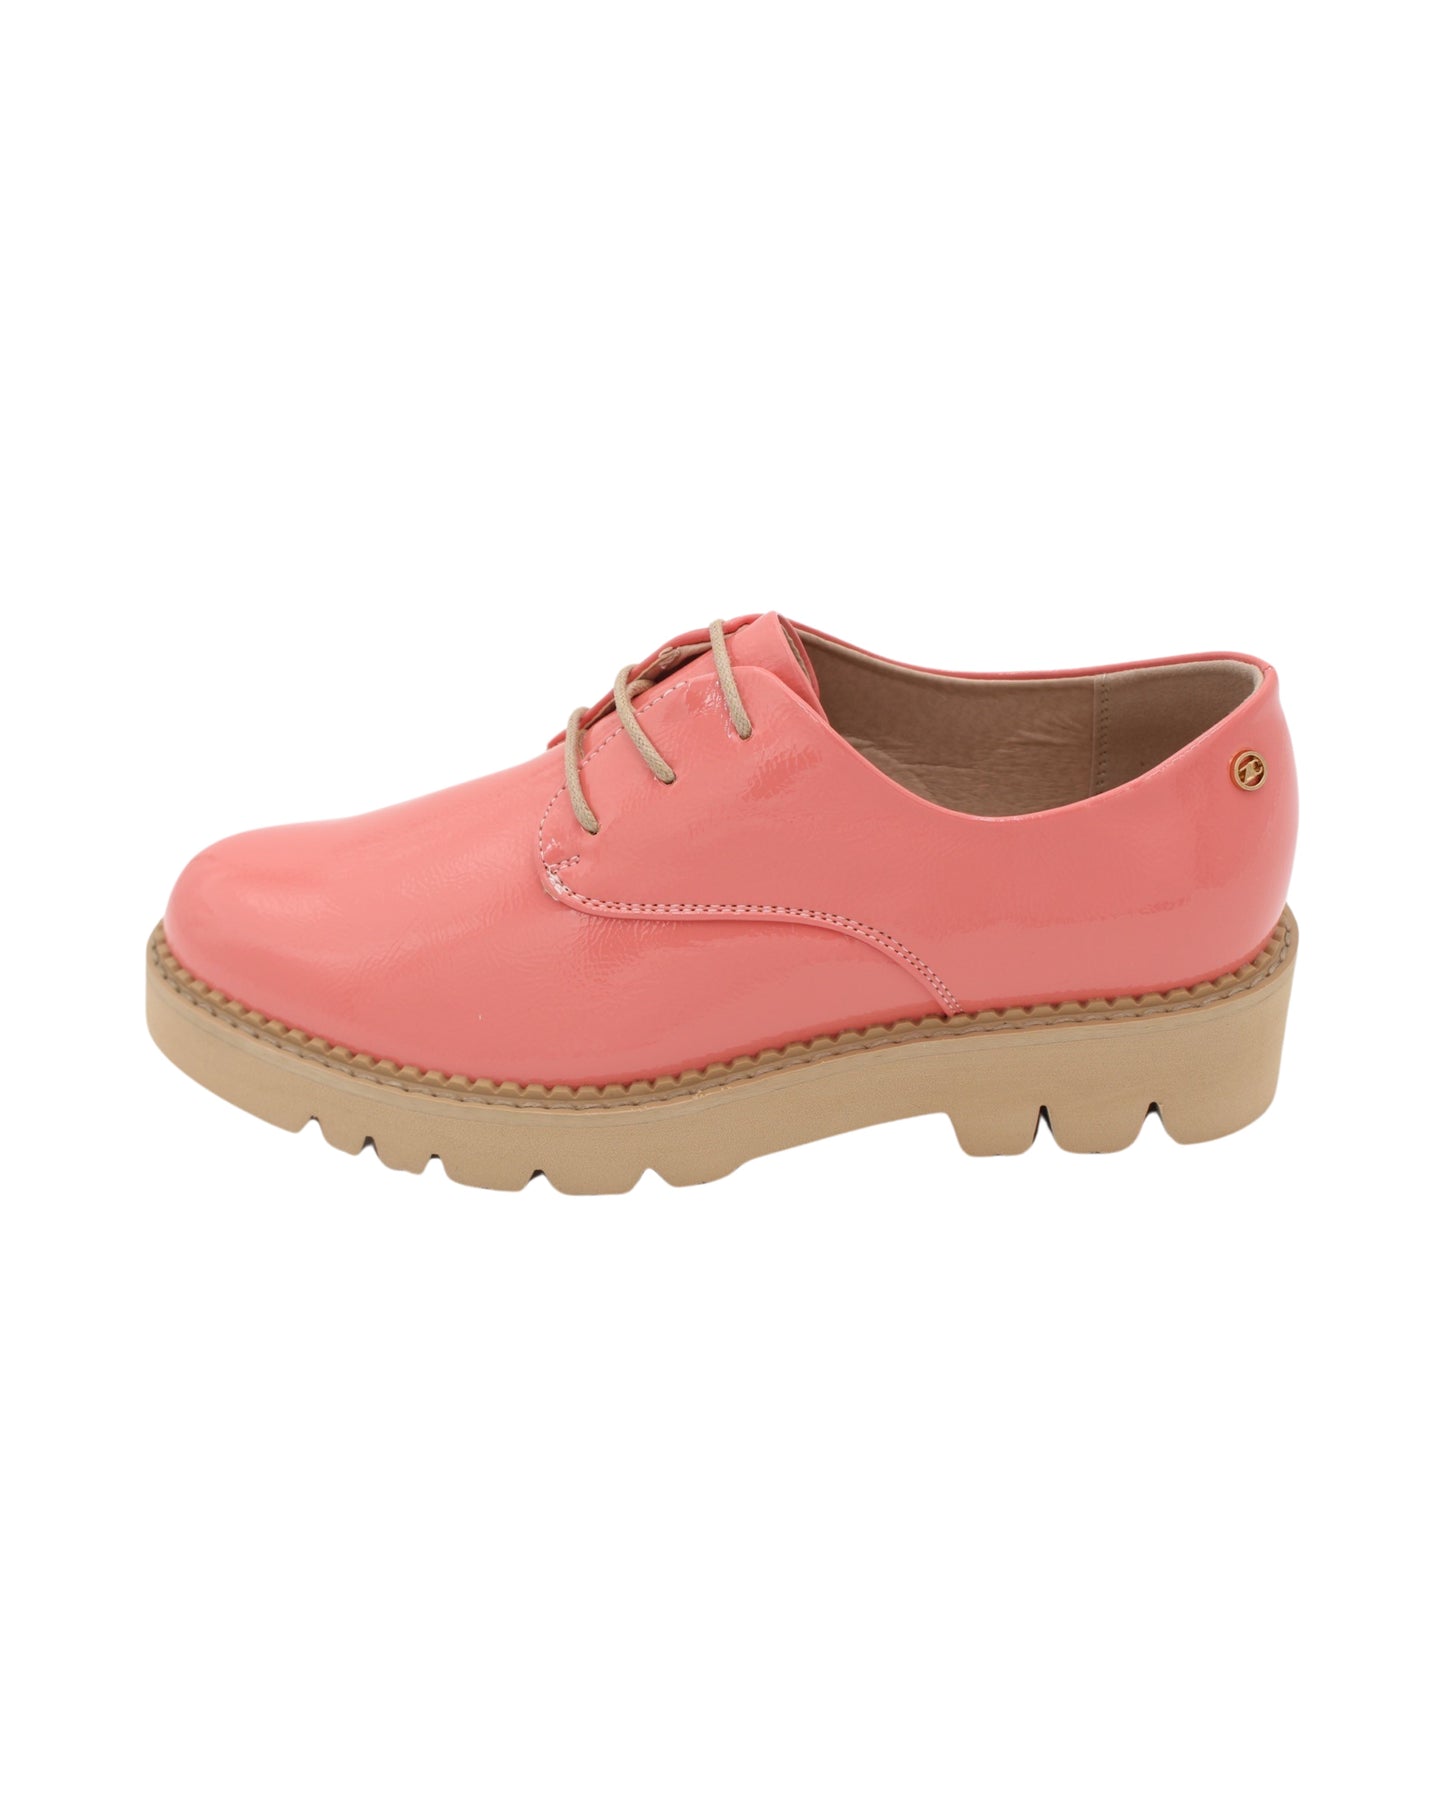 Zanni - Ladies Shoes Brogues Pink (2160)